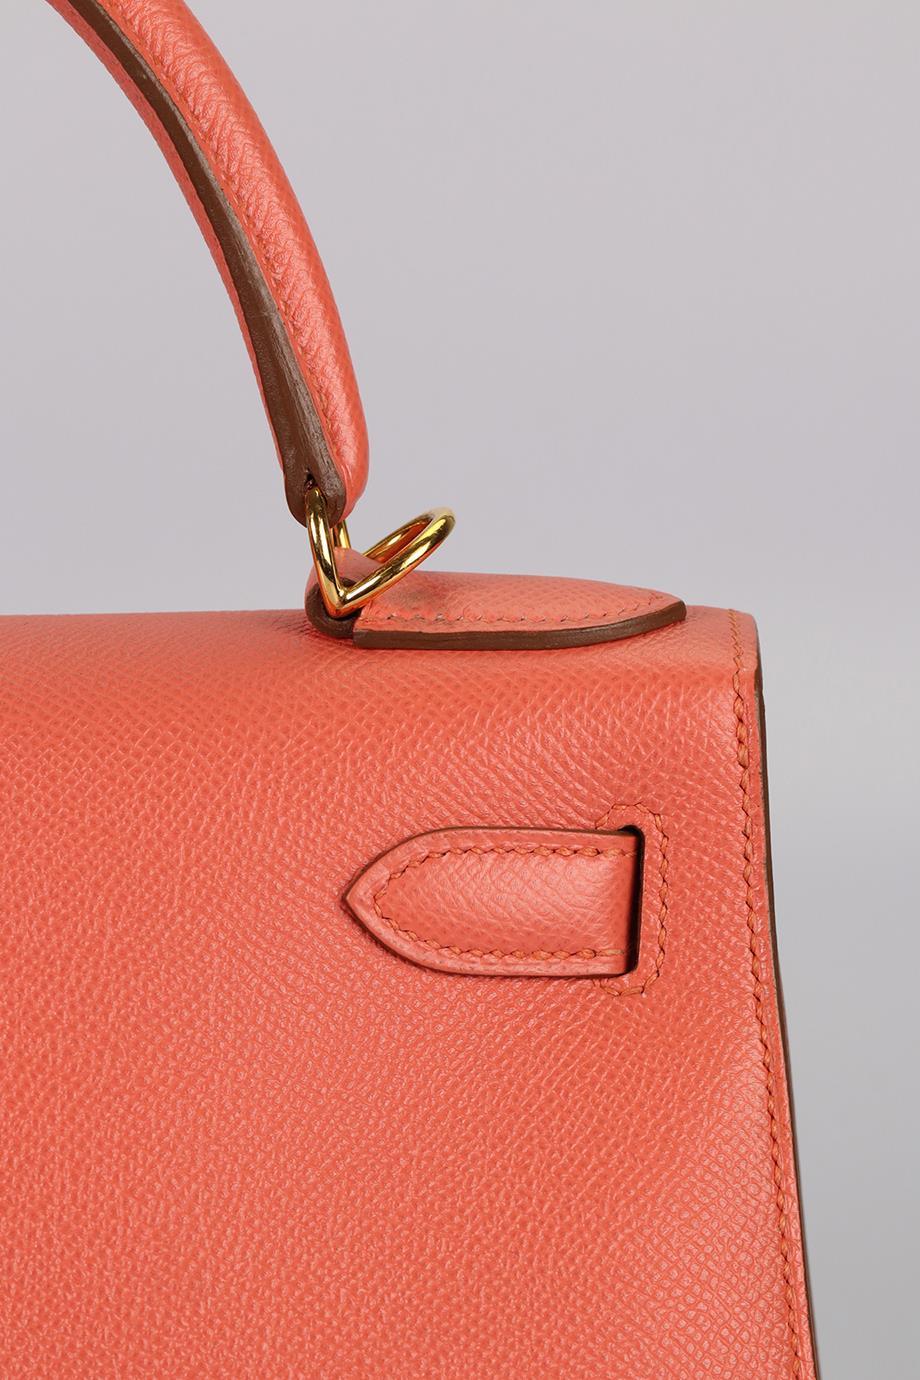 Hermès 2014 Kelly Ii Sellier 28 Cm Epsom Leather Bag For Sale 4